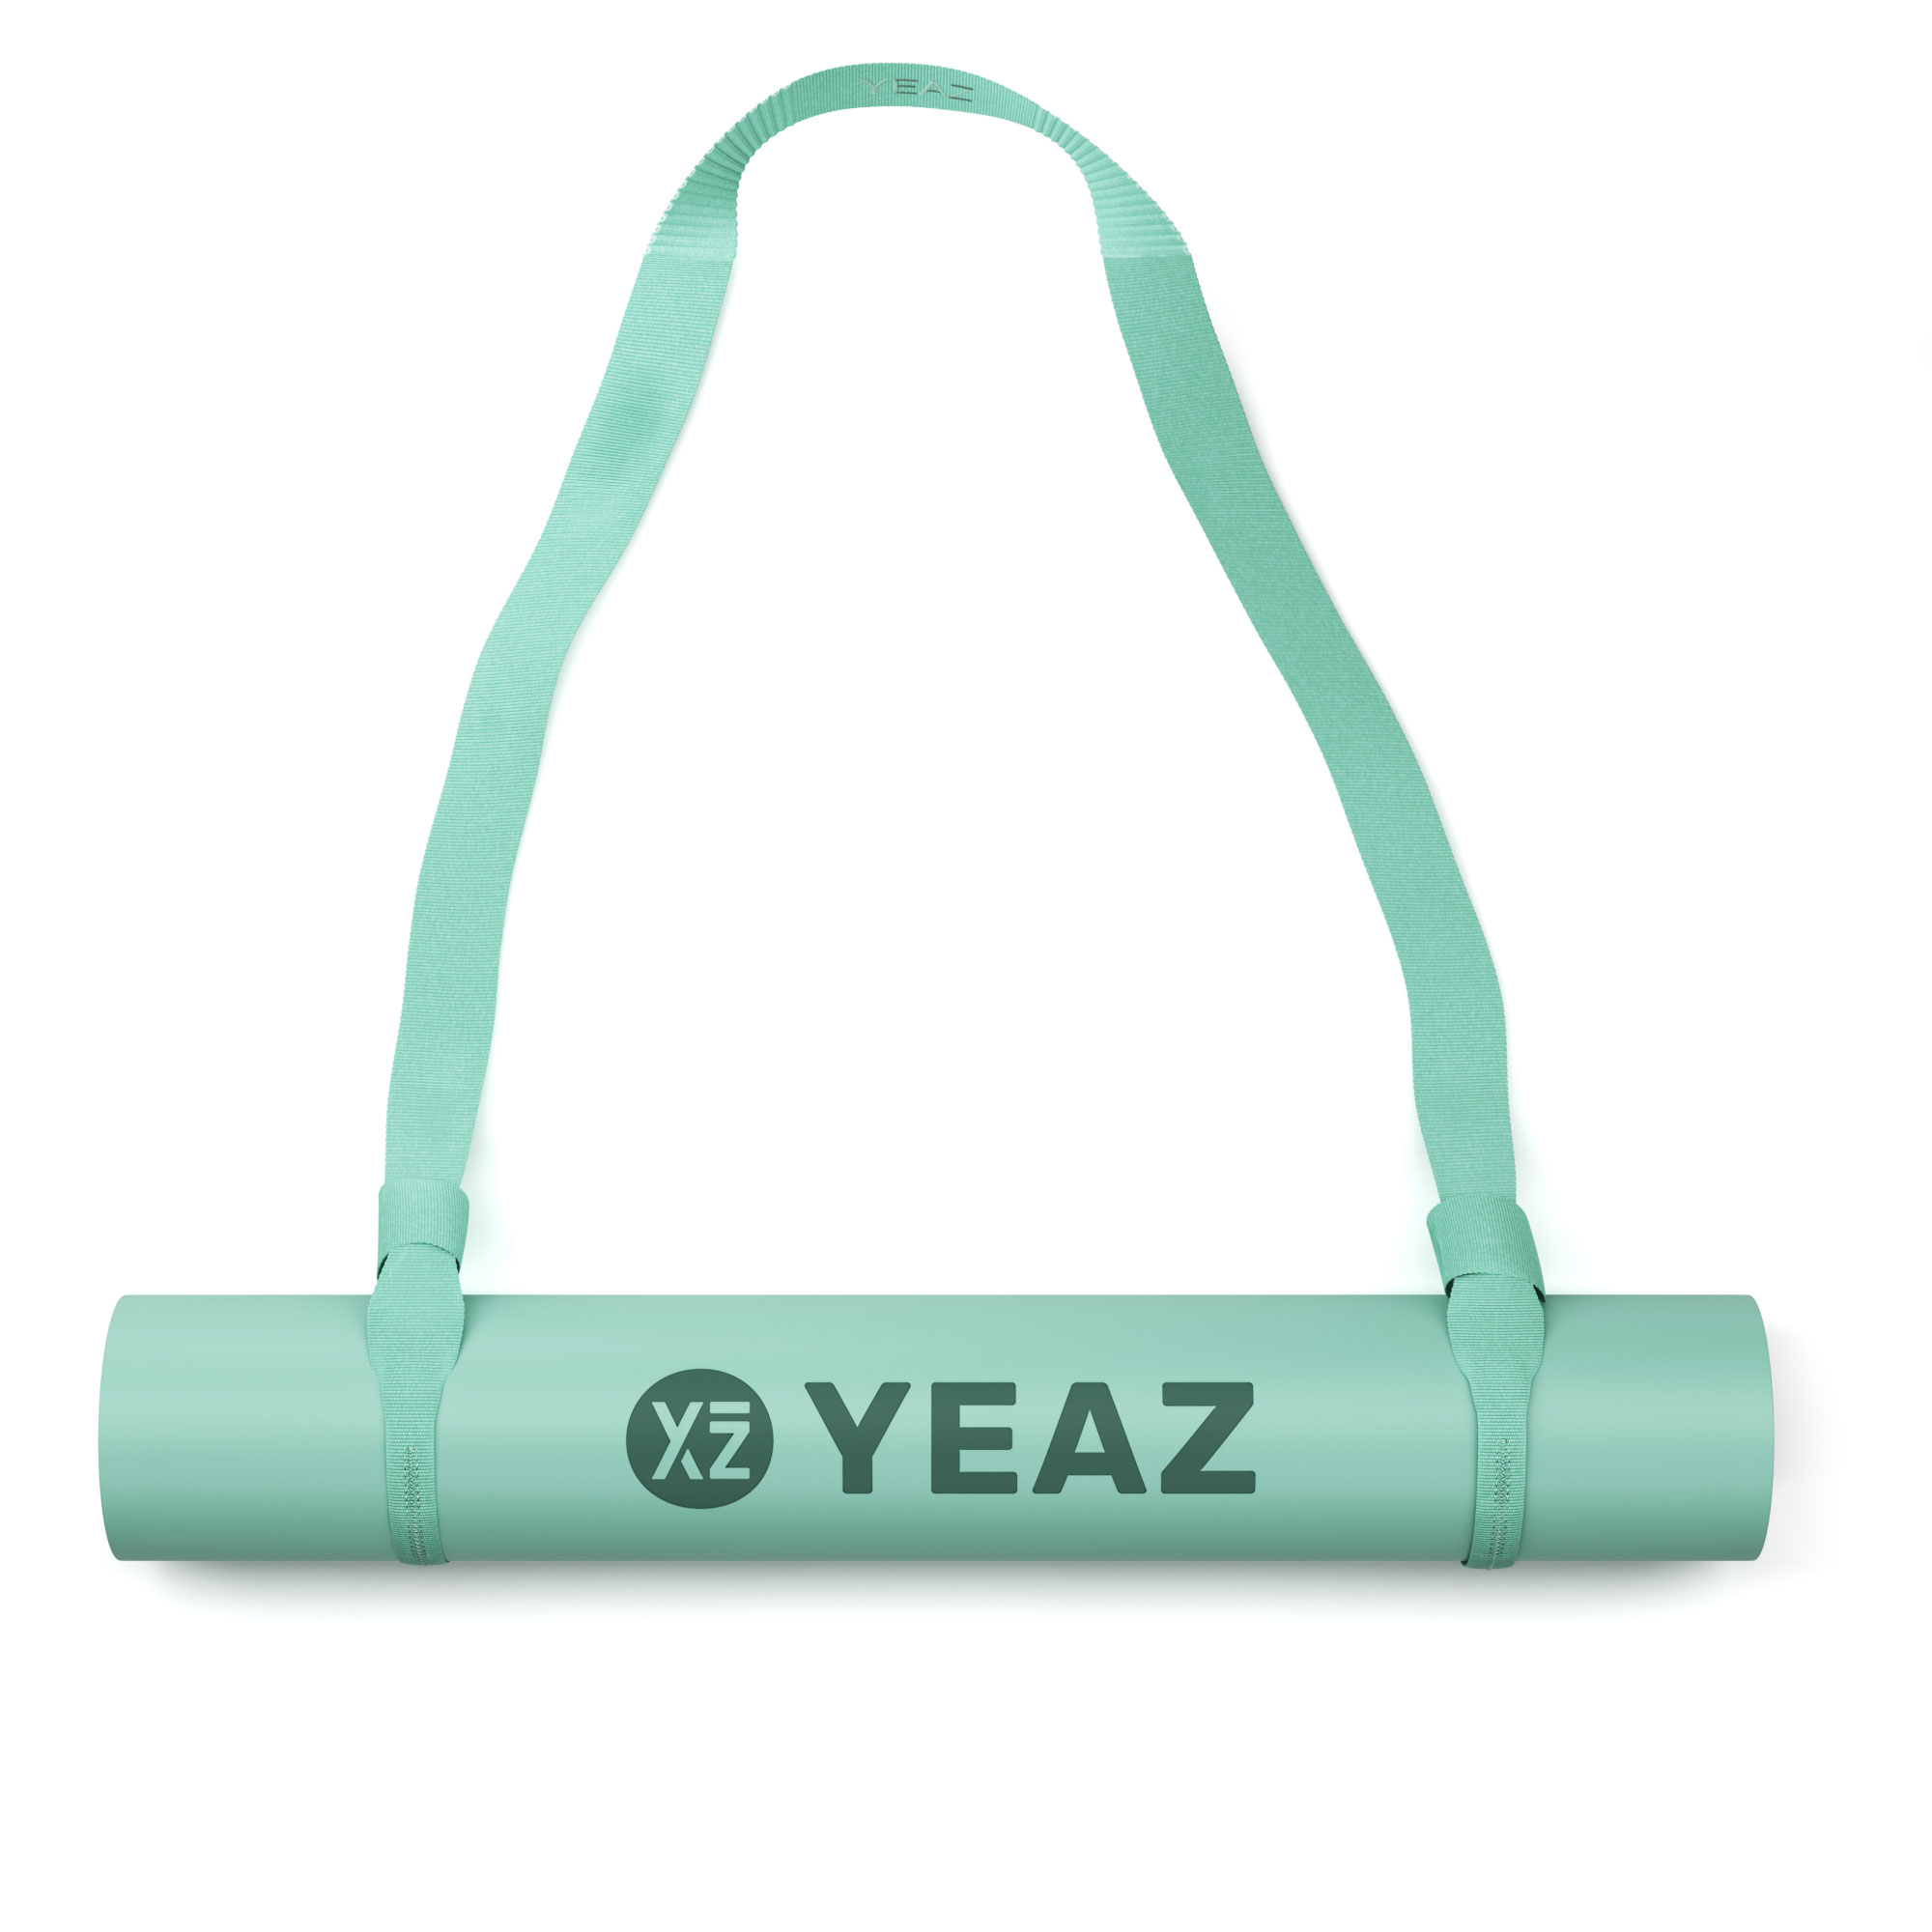 Yogaband & Yogamatte, MOVE UP glass beach Set YEAZ